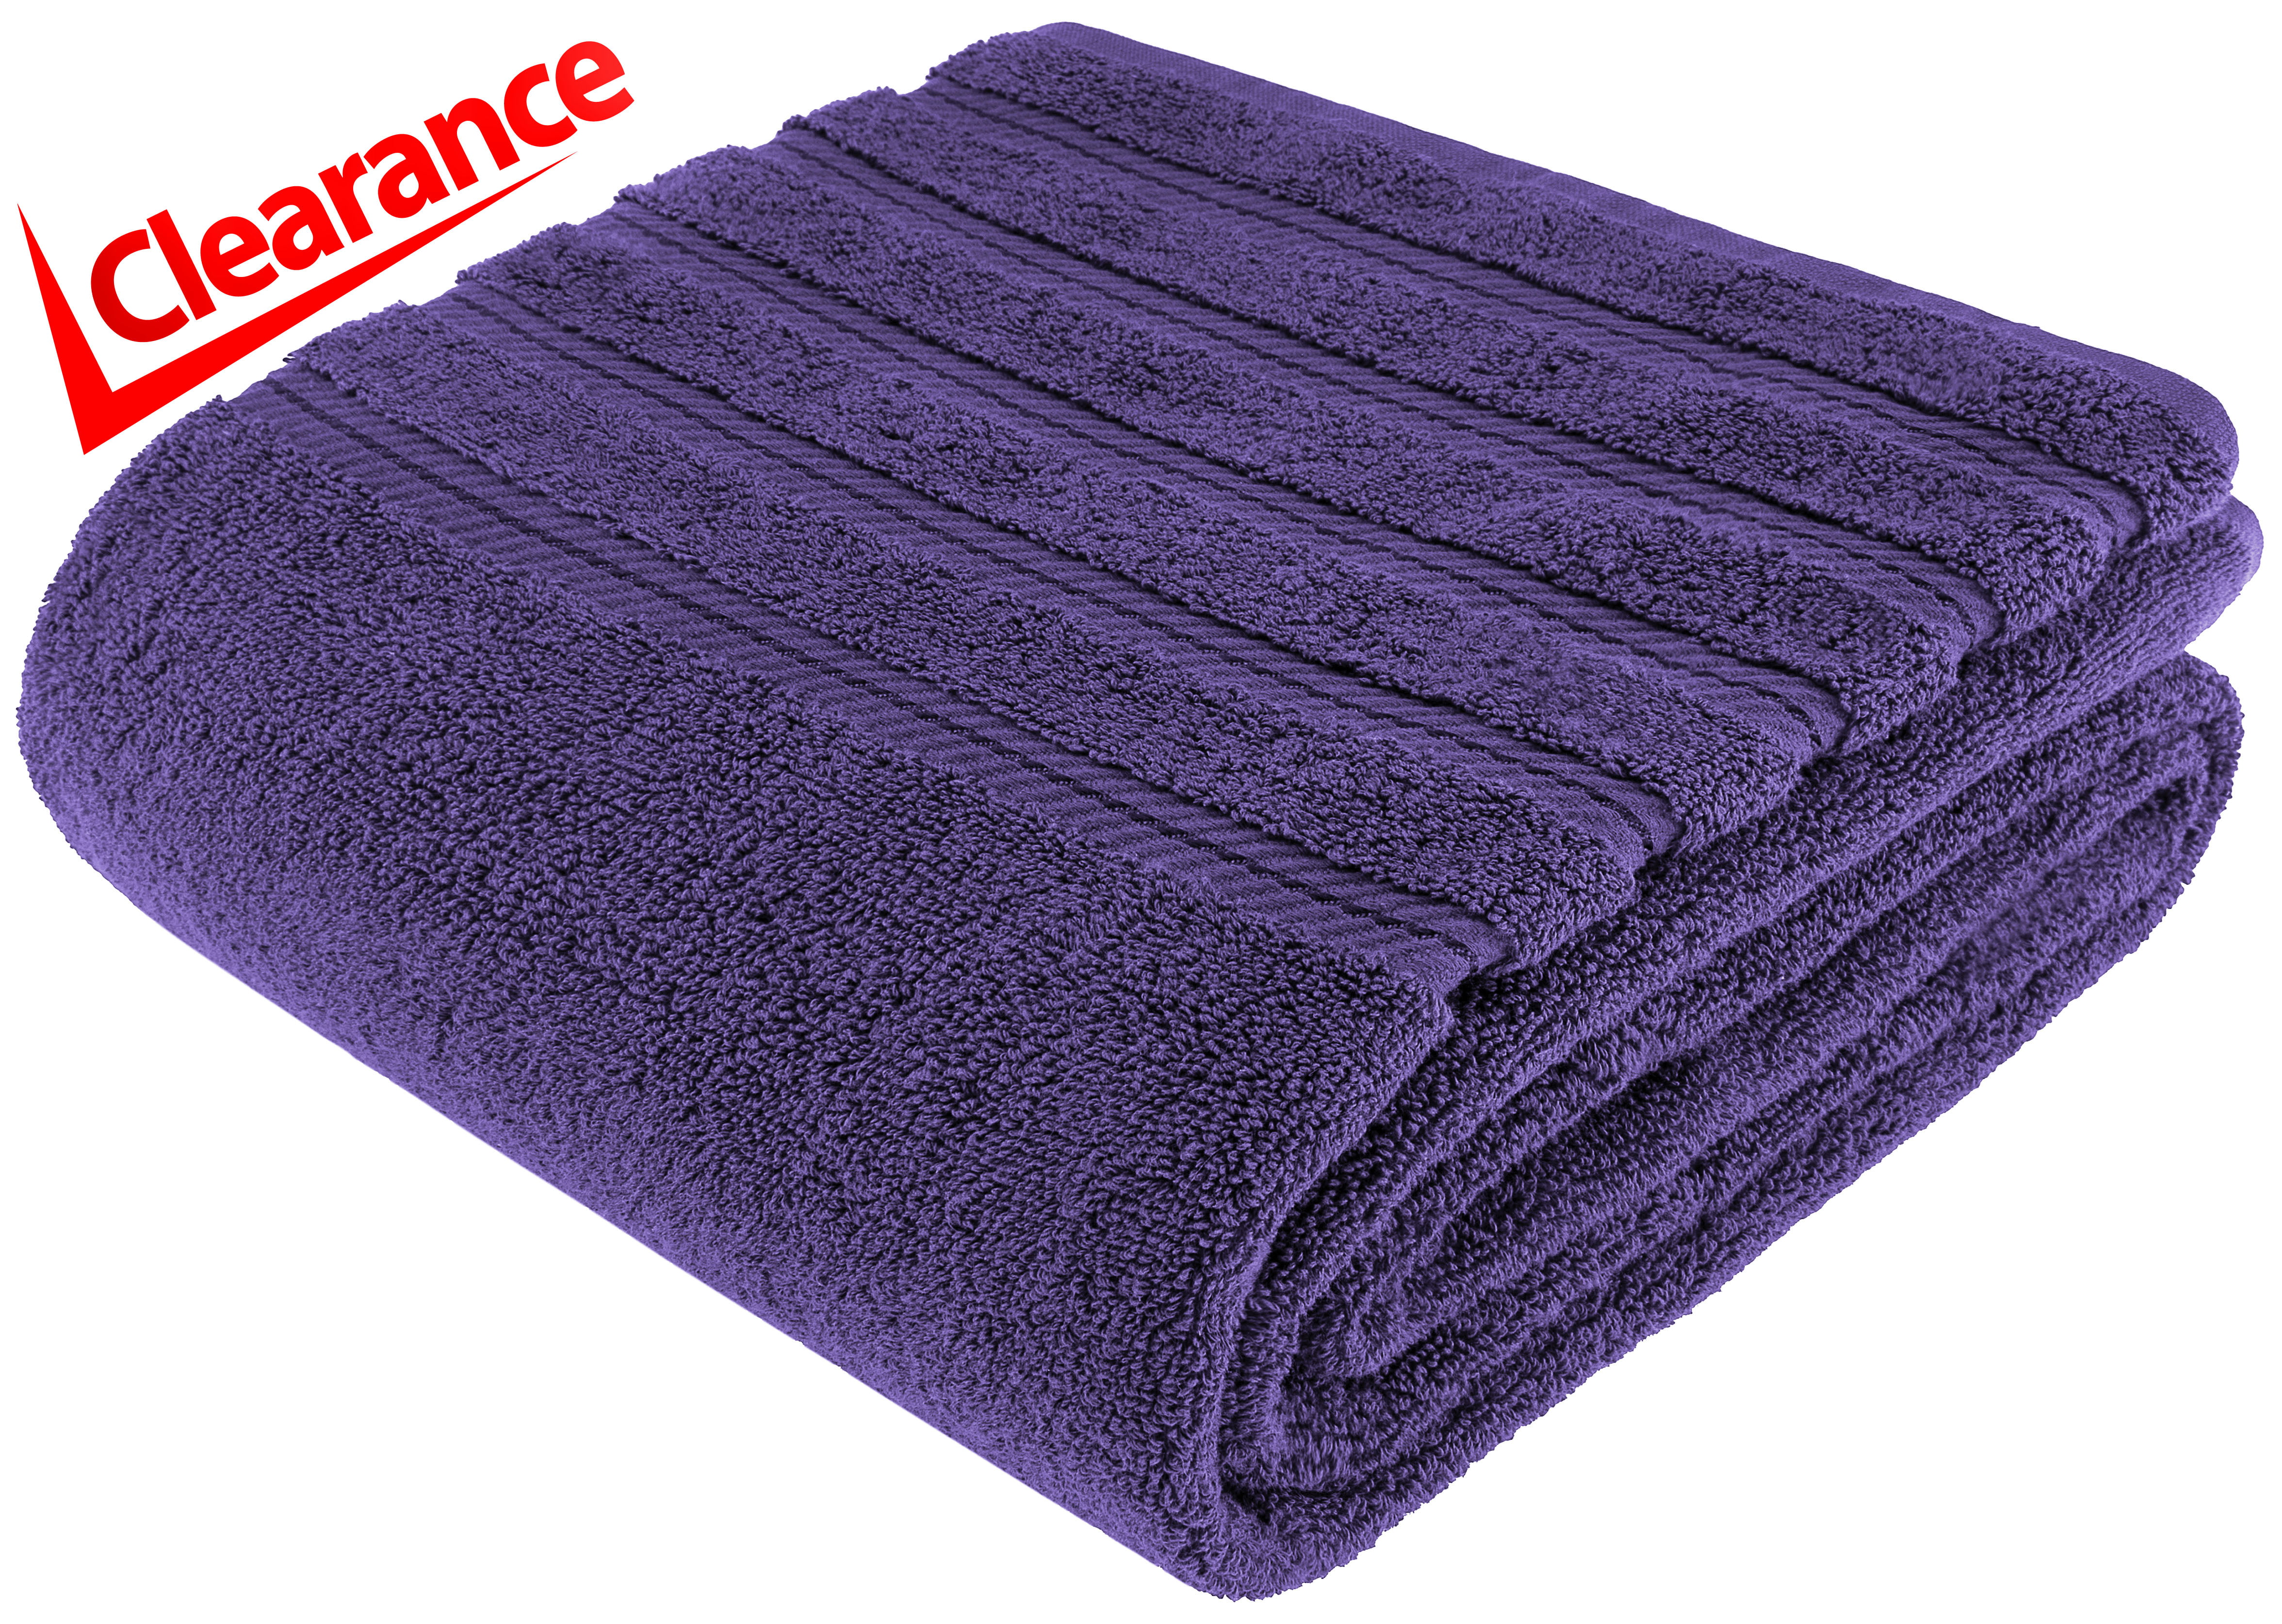 Premium Cotton Turkish Towels Chakir Turkish Linens Hotel & Spa Quality 35''x70'' Jumbo Bath Towels - Plum 